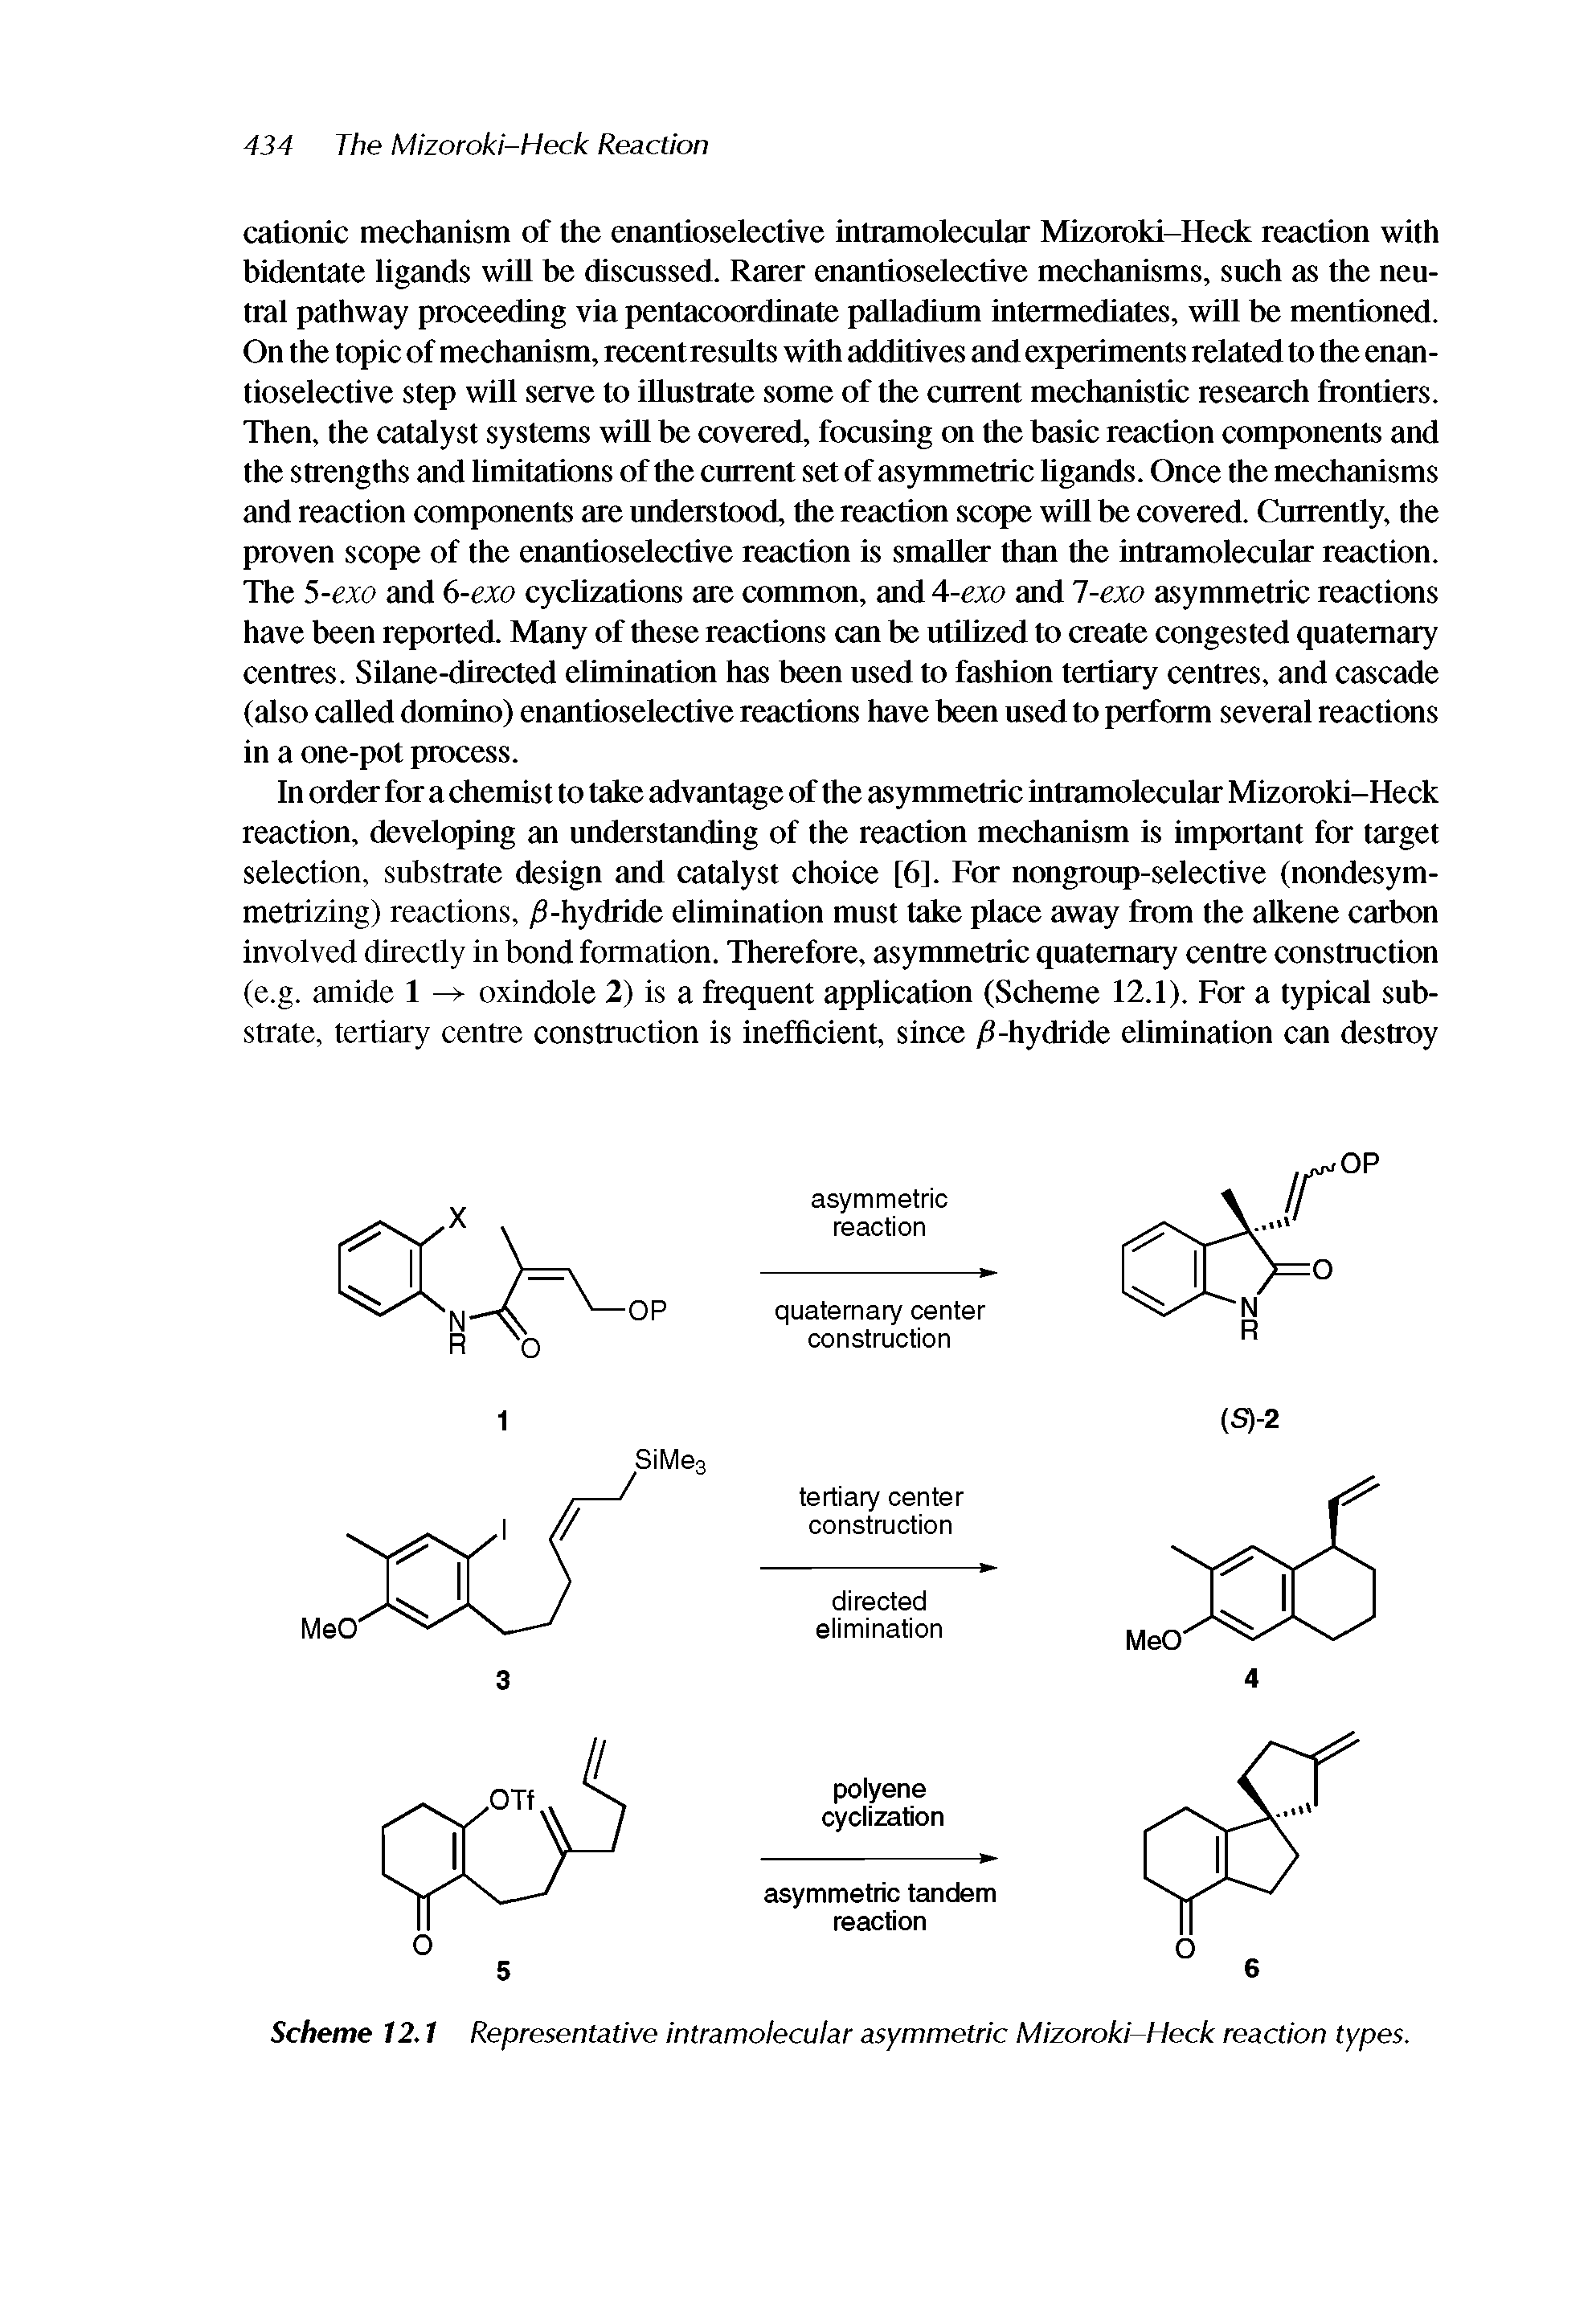 Scheme 12.1 Representative intramolecular asymmetric Mizoroki Heck reaction types.